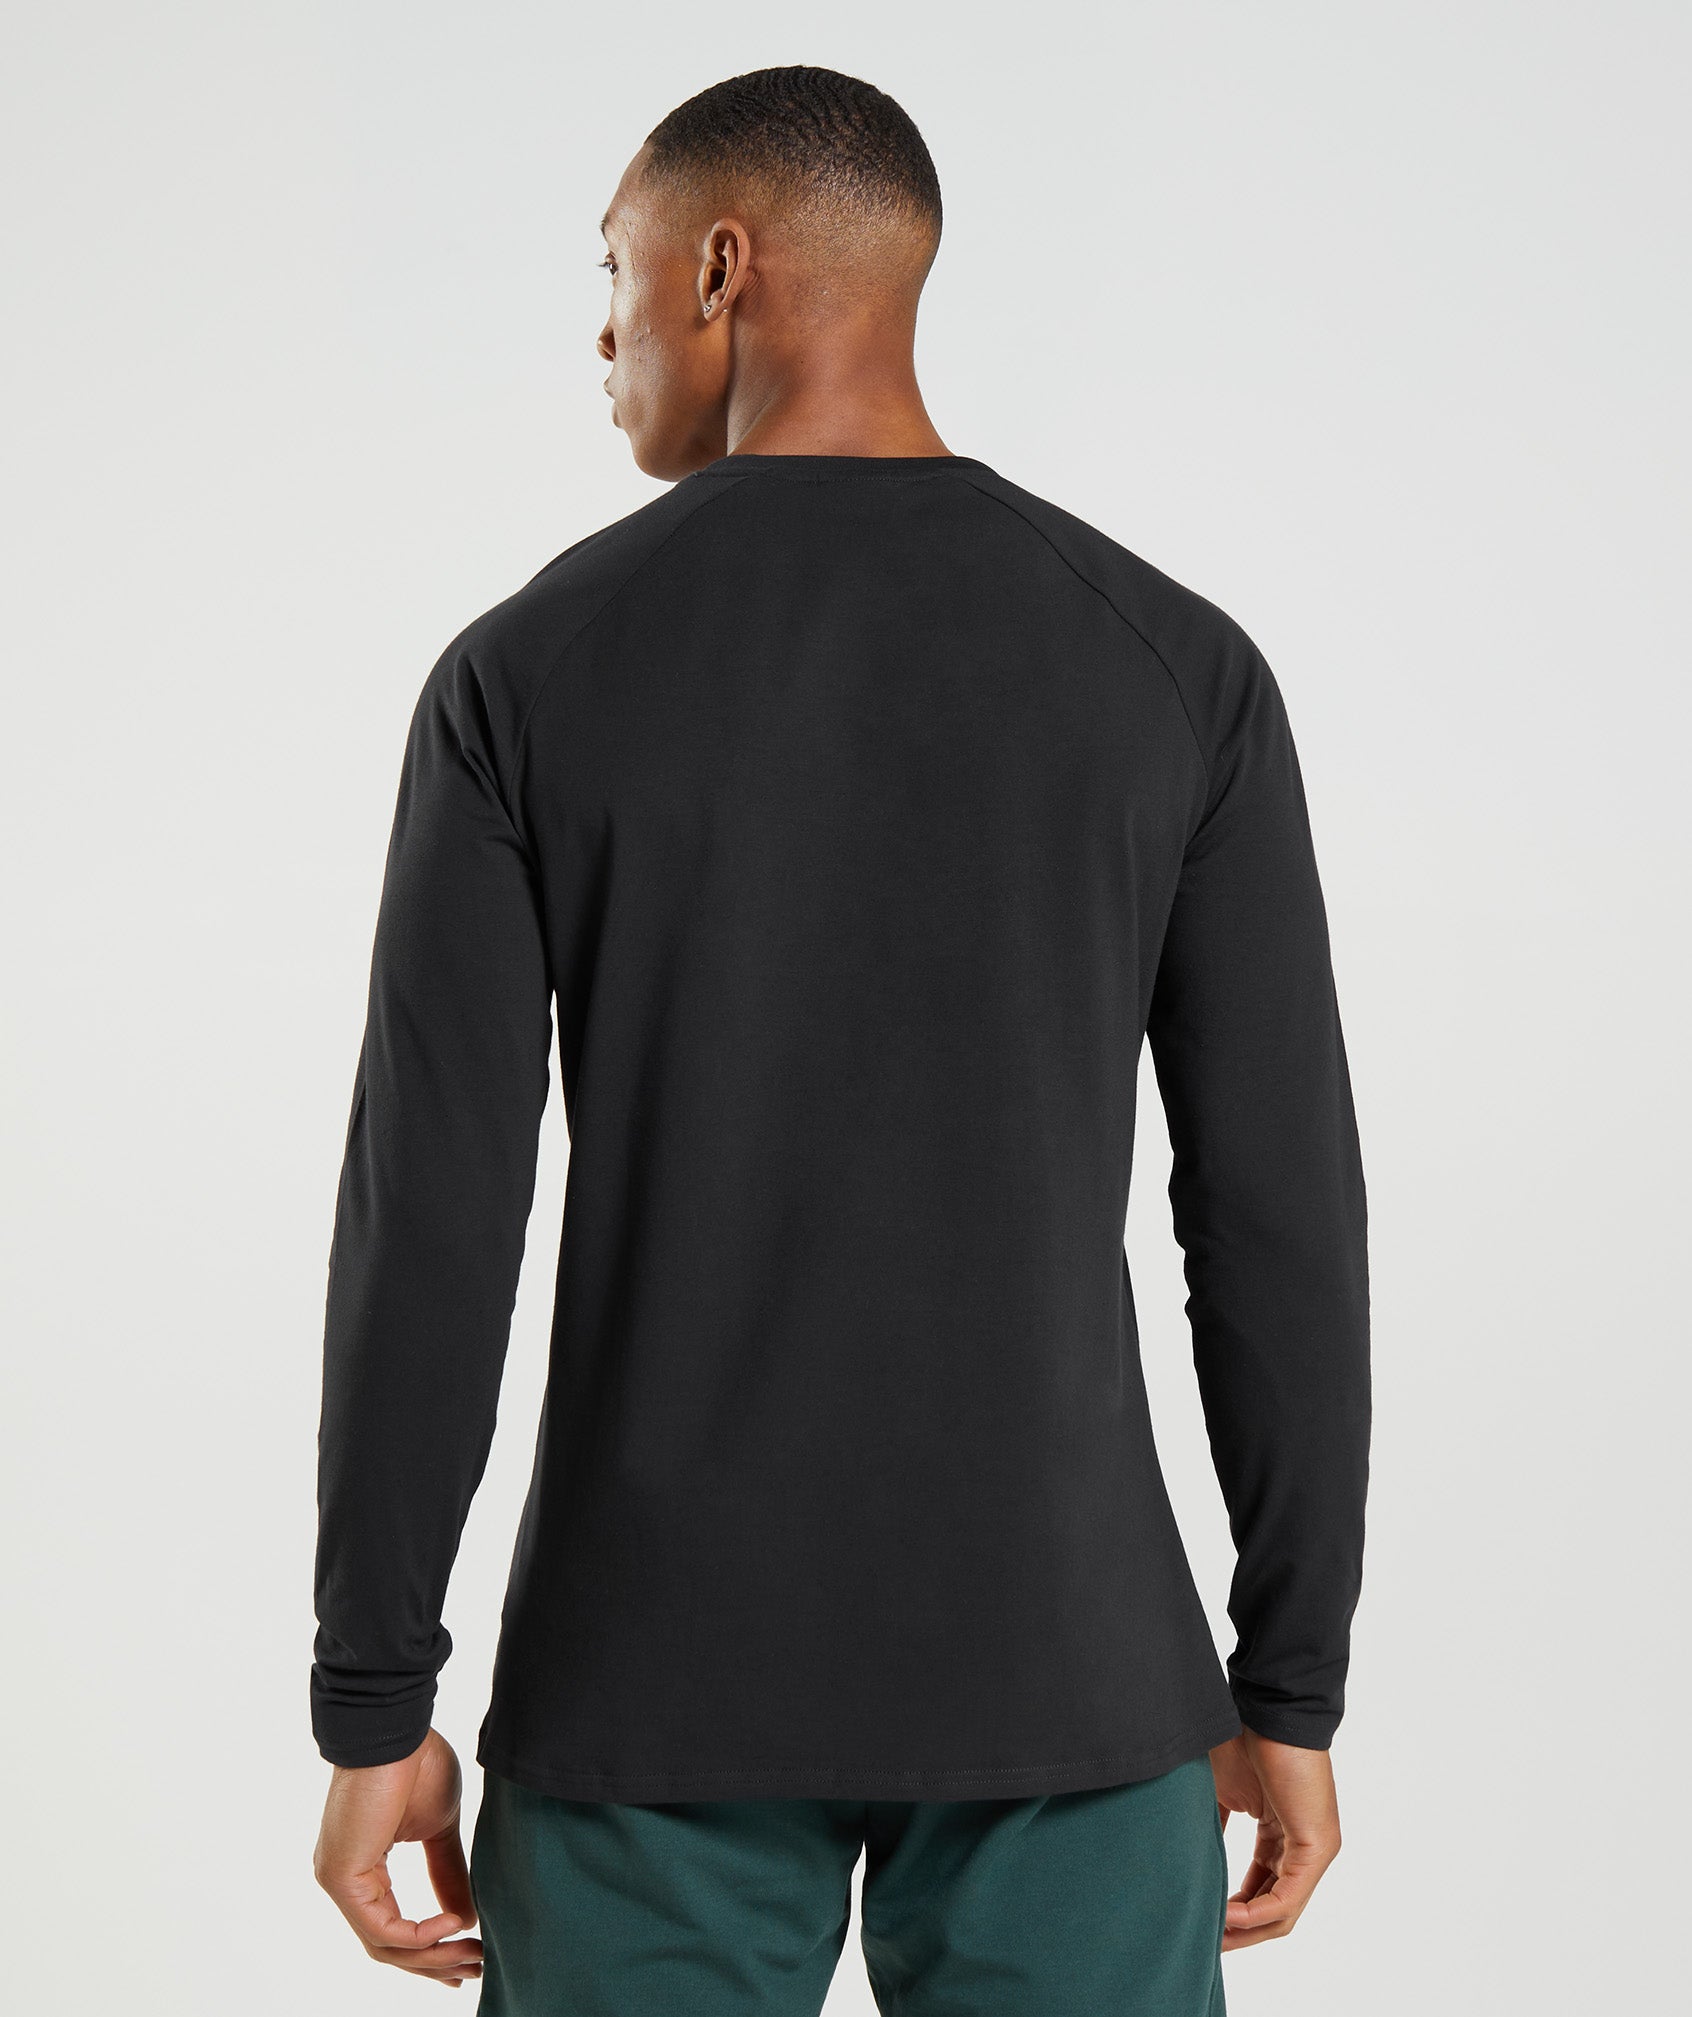 Apollo Camo Long Sleeve T-Shirt in Black - view 2